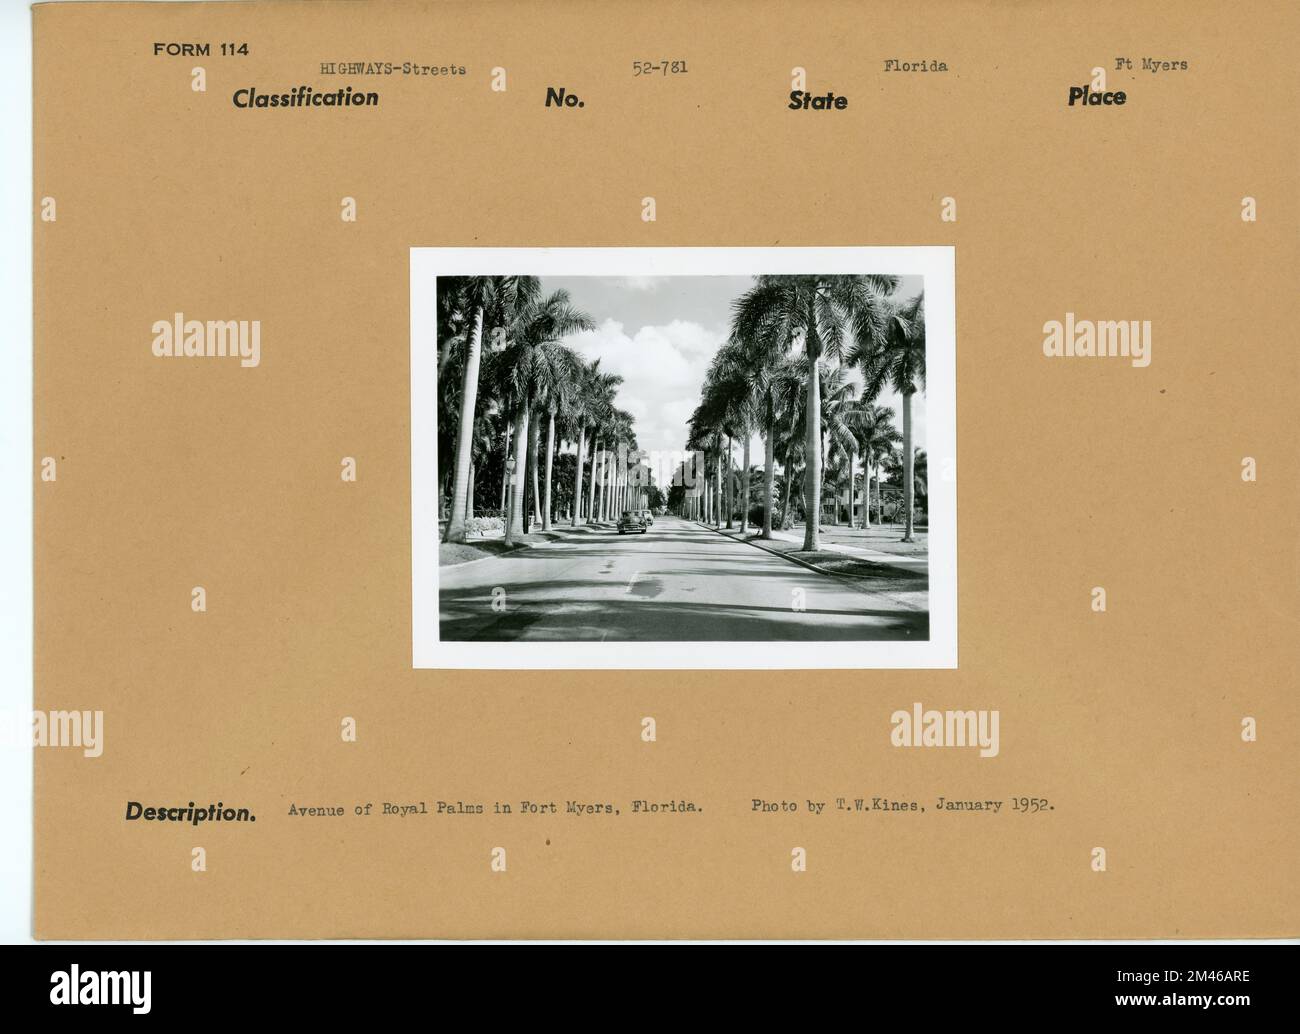 Straße in Florida. Originalunterschrift: Avenue of Royal Palms in Fort Myers, Florida. Foto: T. W. Kines, Januar 1952. Bundesstaat: Florida. Ort: Ft. Myers. Stockfoto